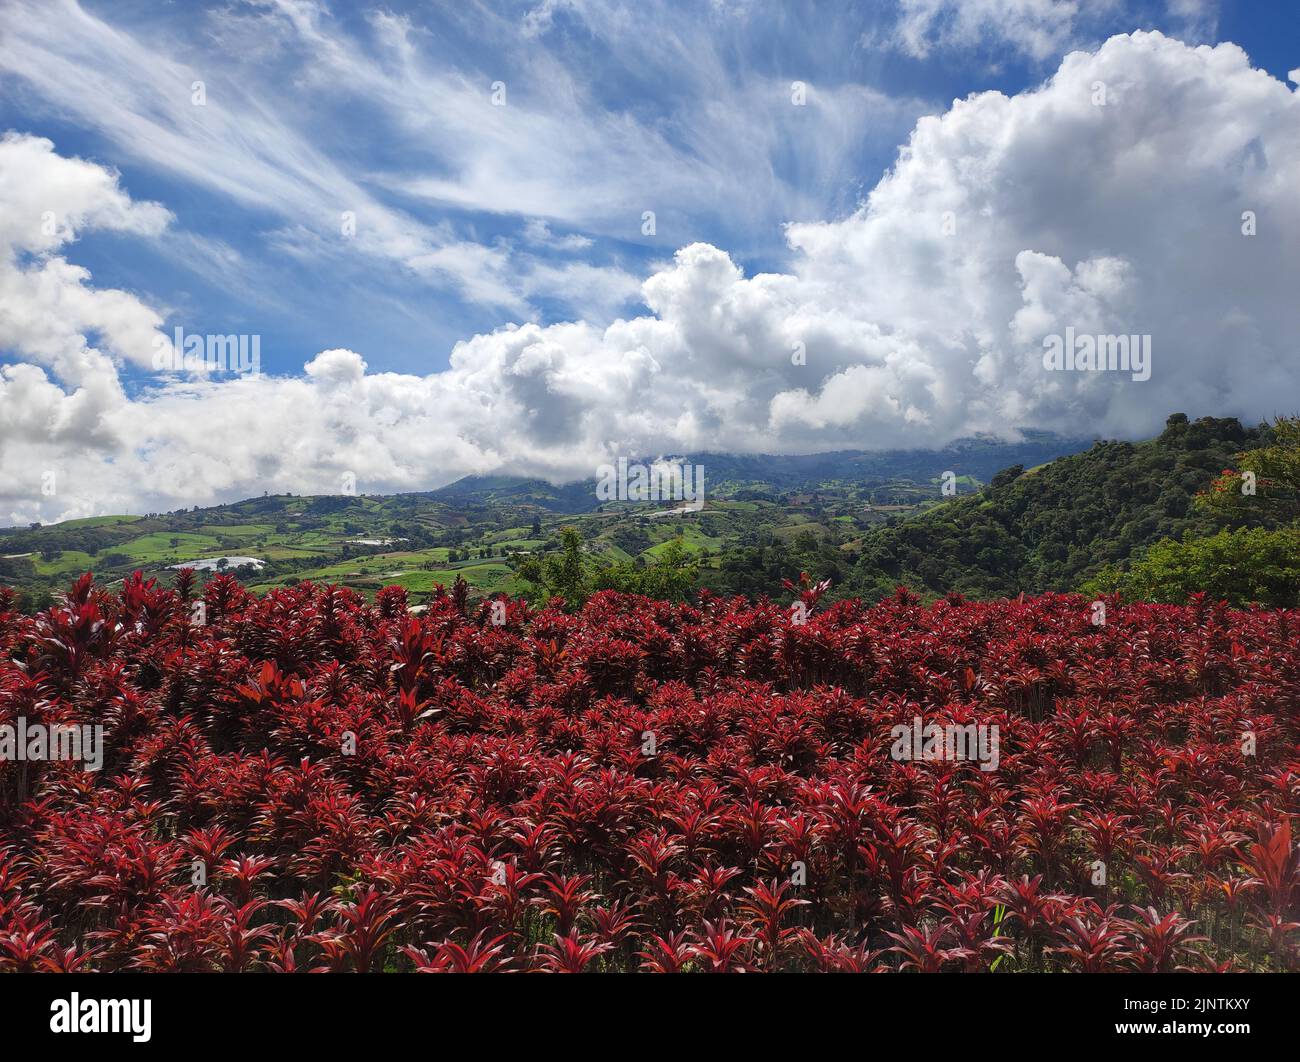 Field of red Dracaena Stock Photo